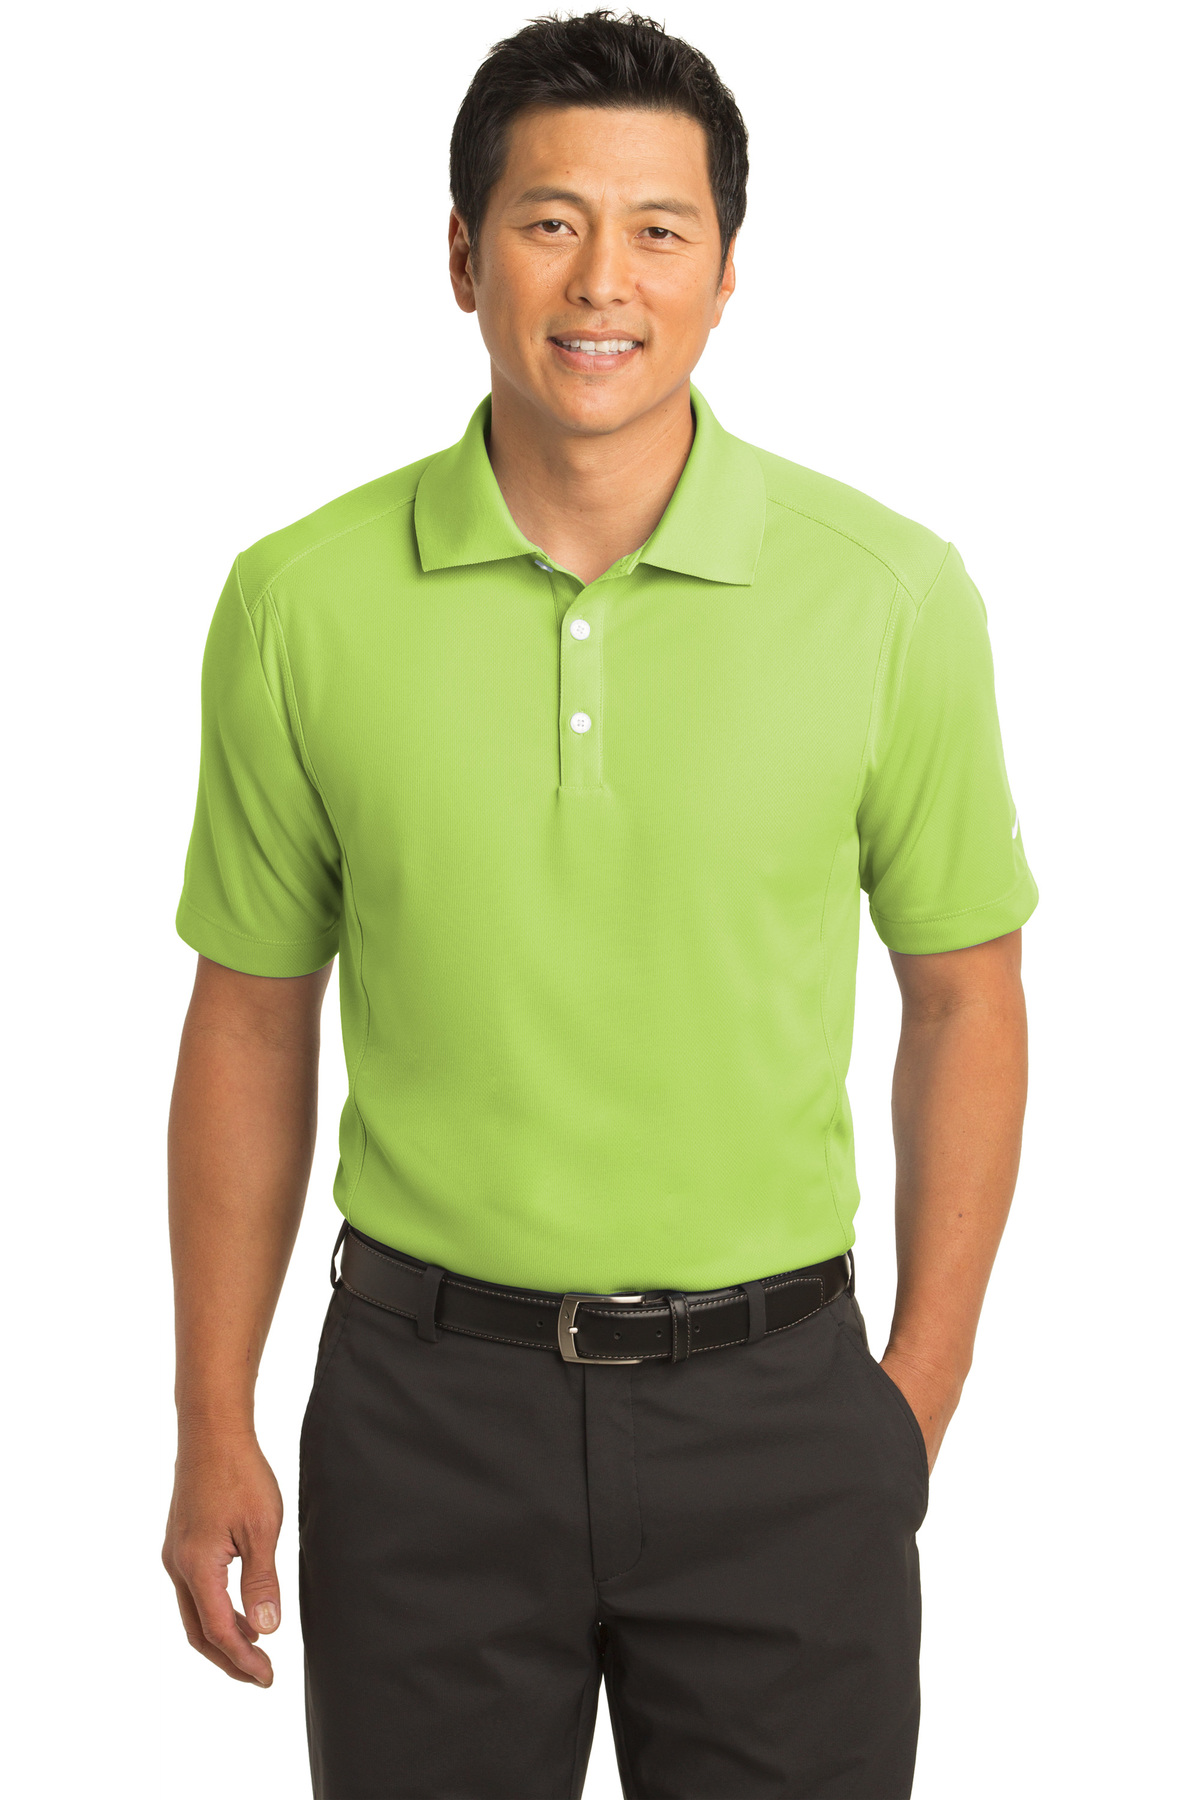 green dri fit polo shirts